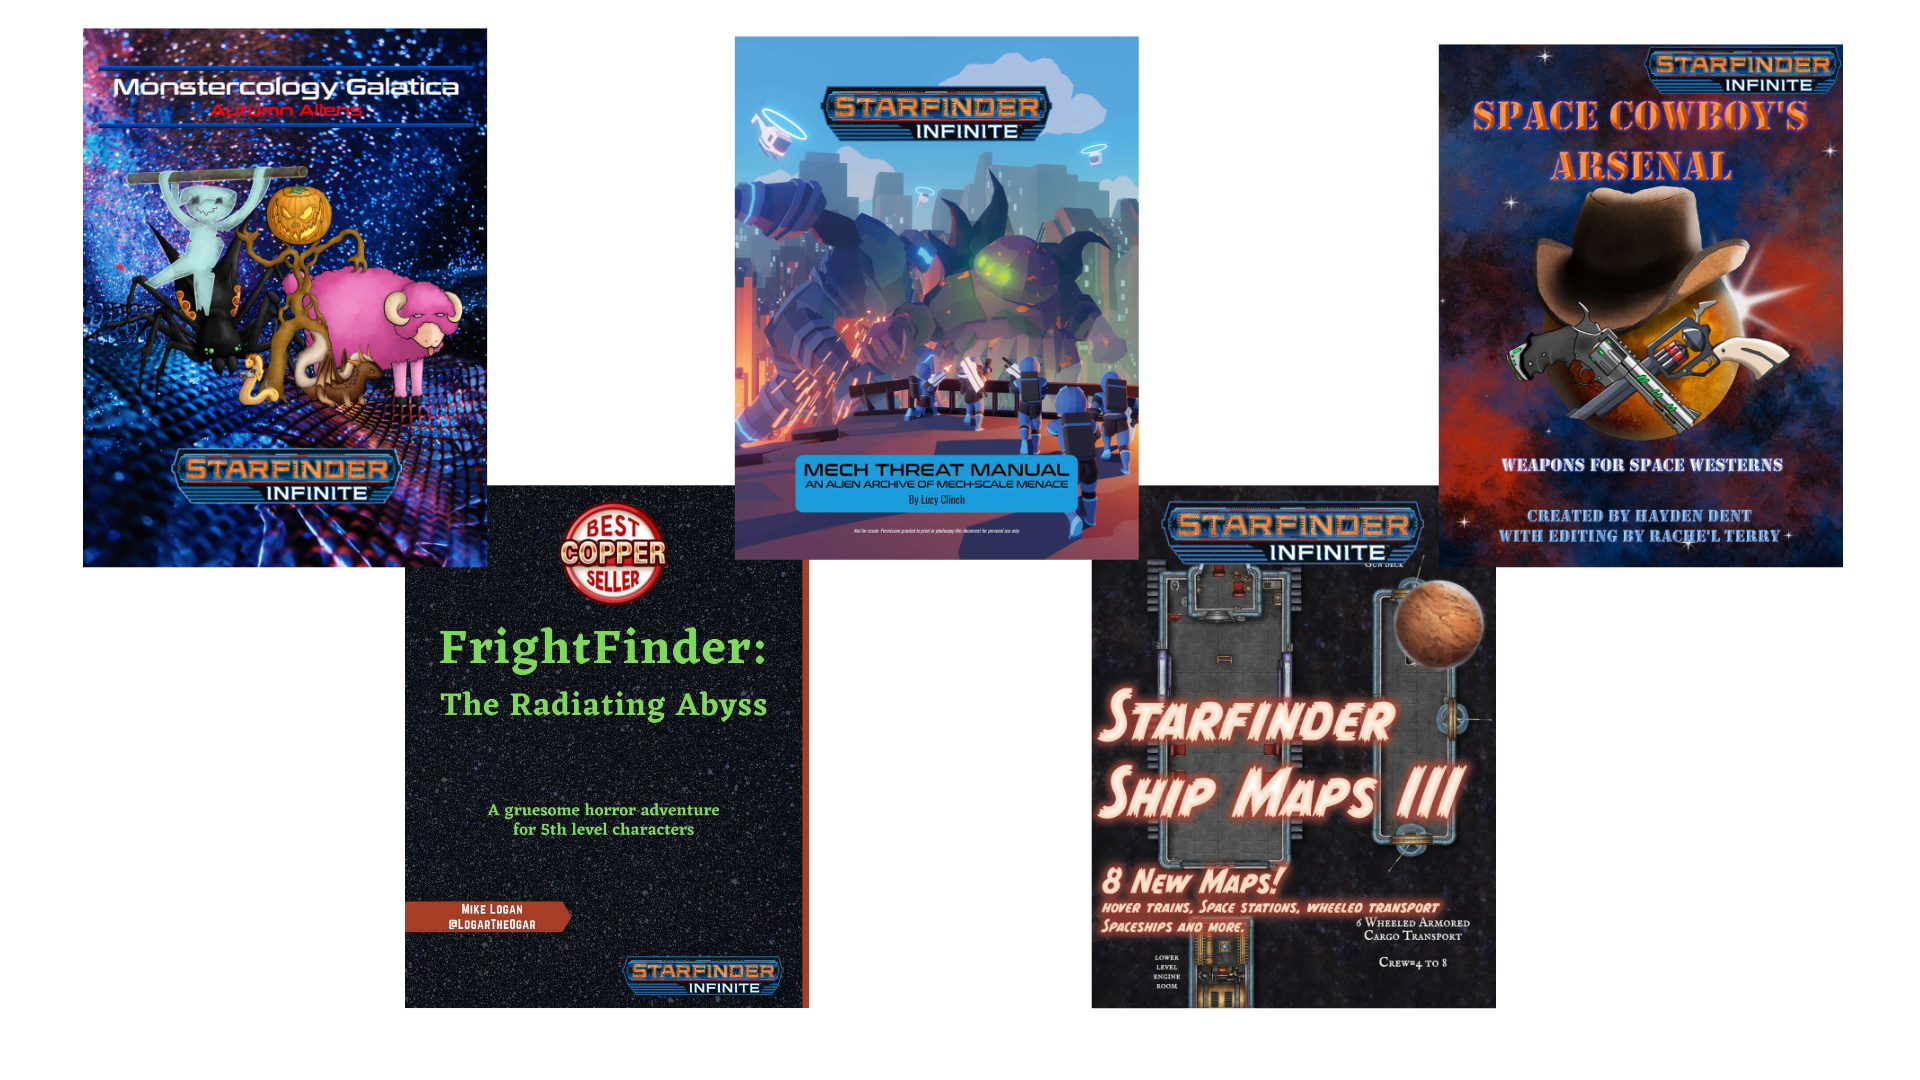 Starfinder Infinite October best seller covers